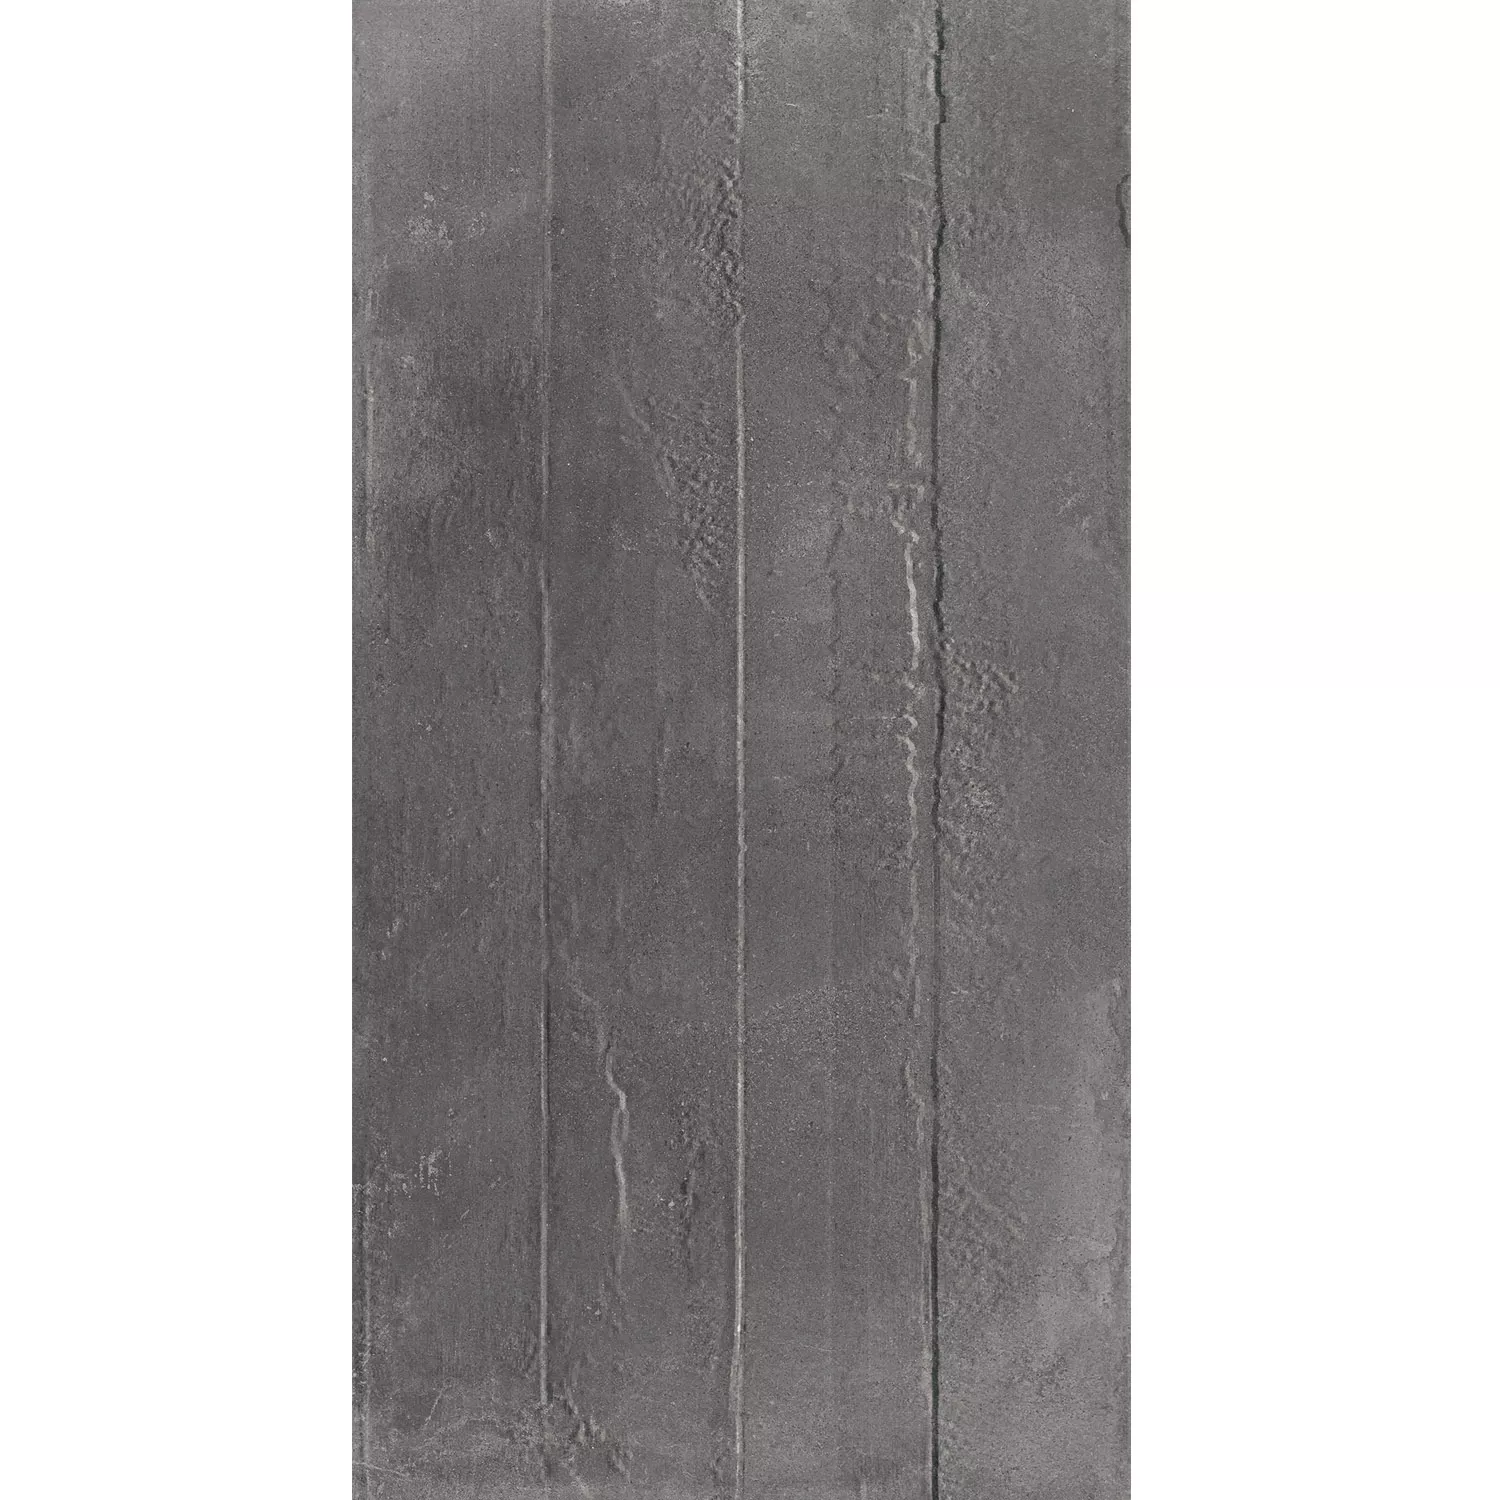 Ladrilho Olhar de Pedra Lobetal Graphit 45x90cm